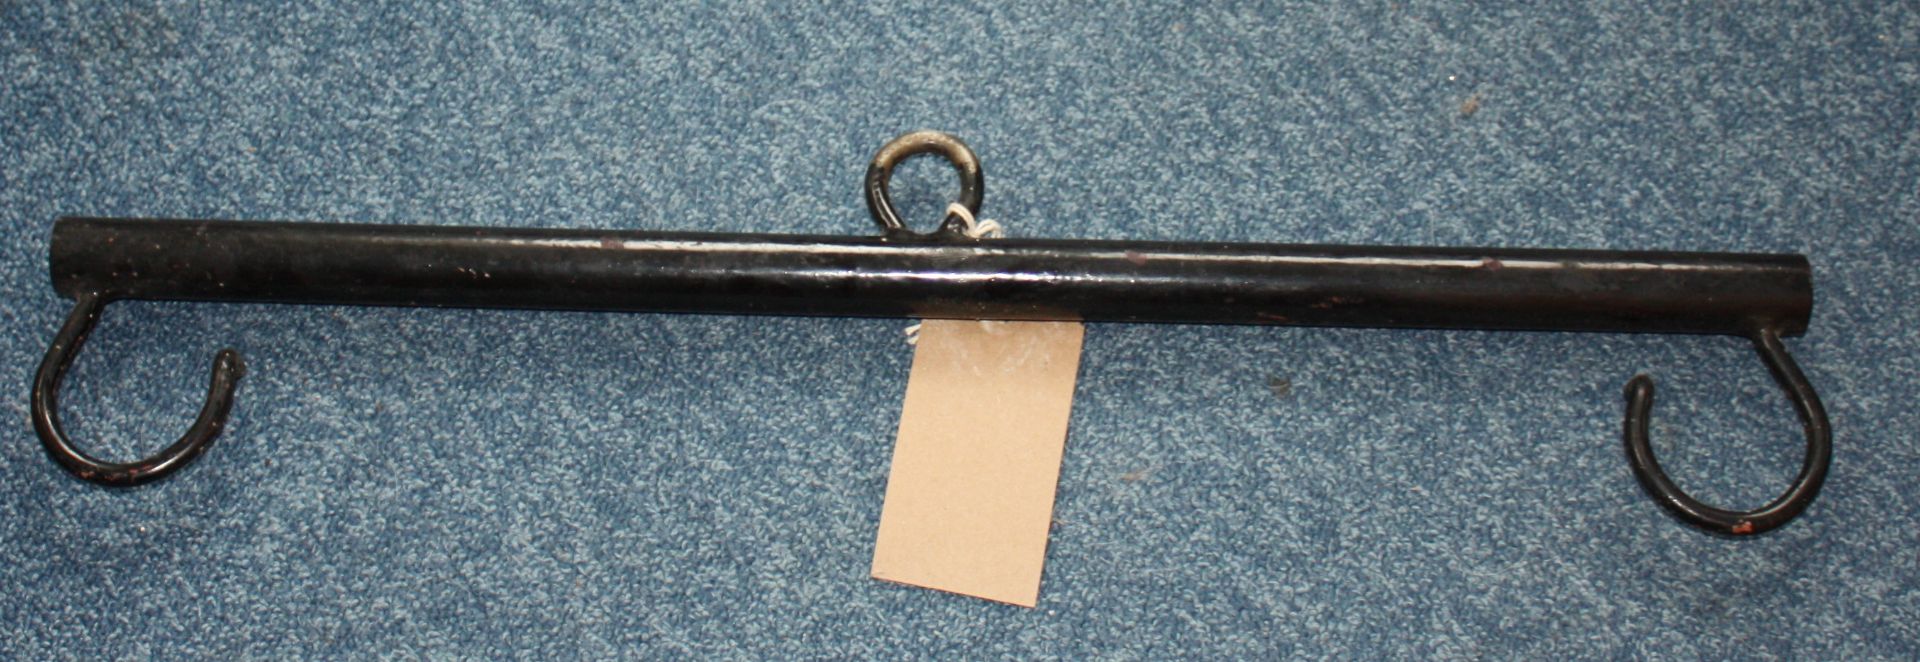 Swingletree, 23-inches long